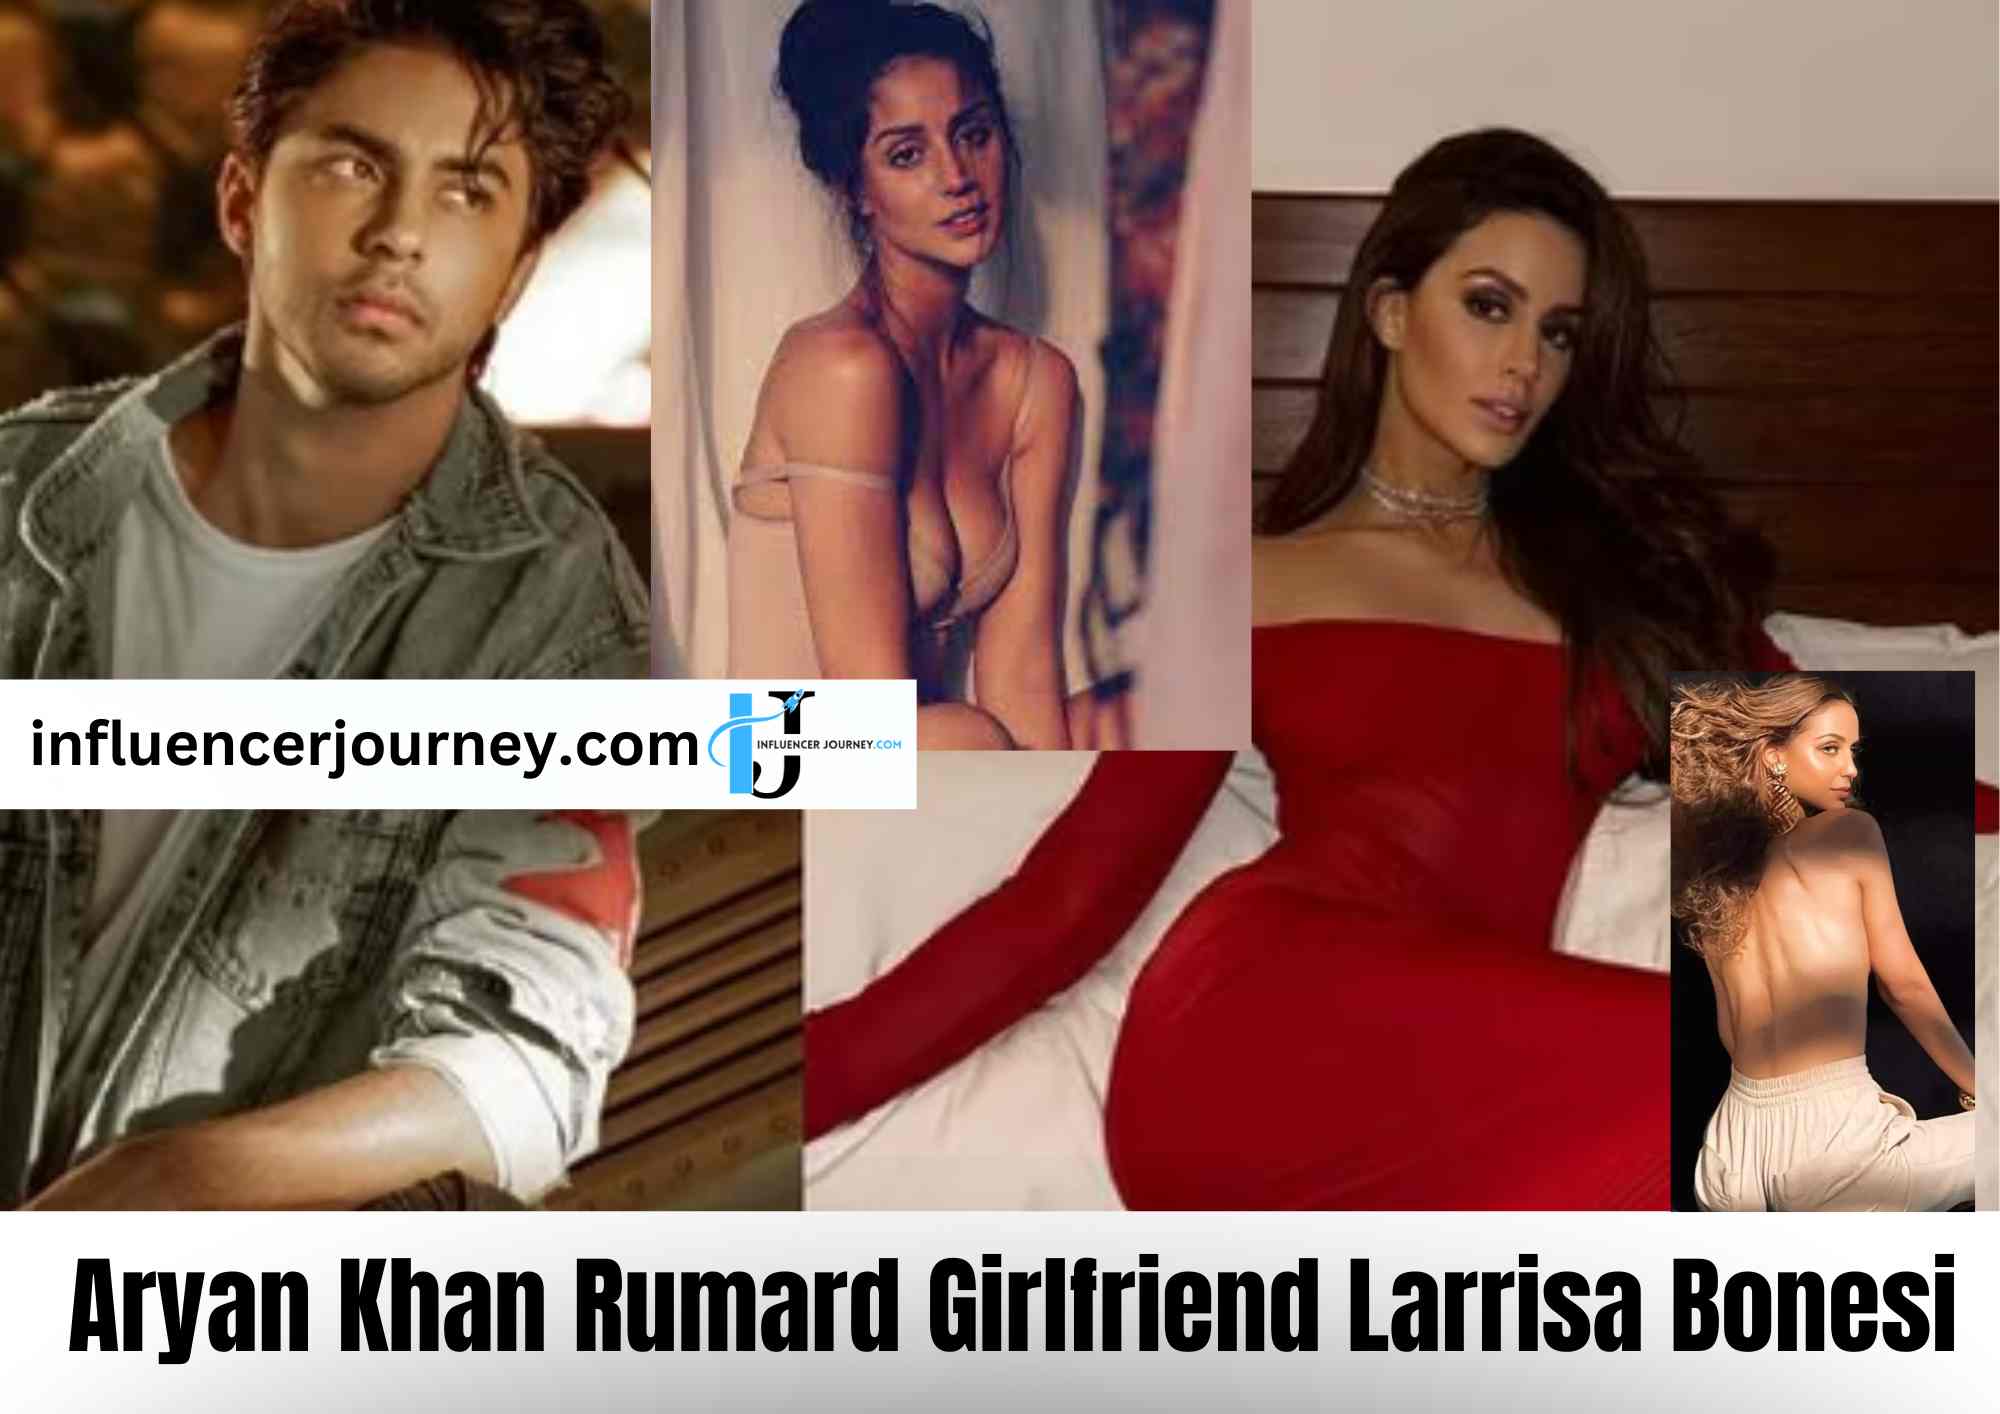 Meet Aryan Khan Rumored Girlfriend Larrisa Bonesi